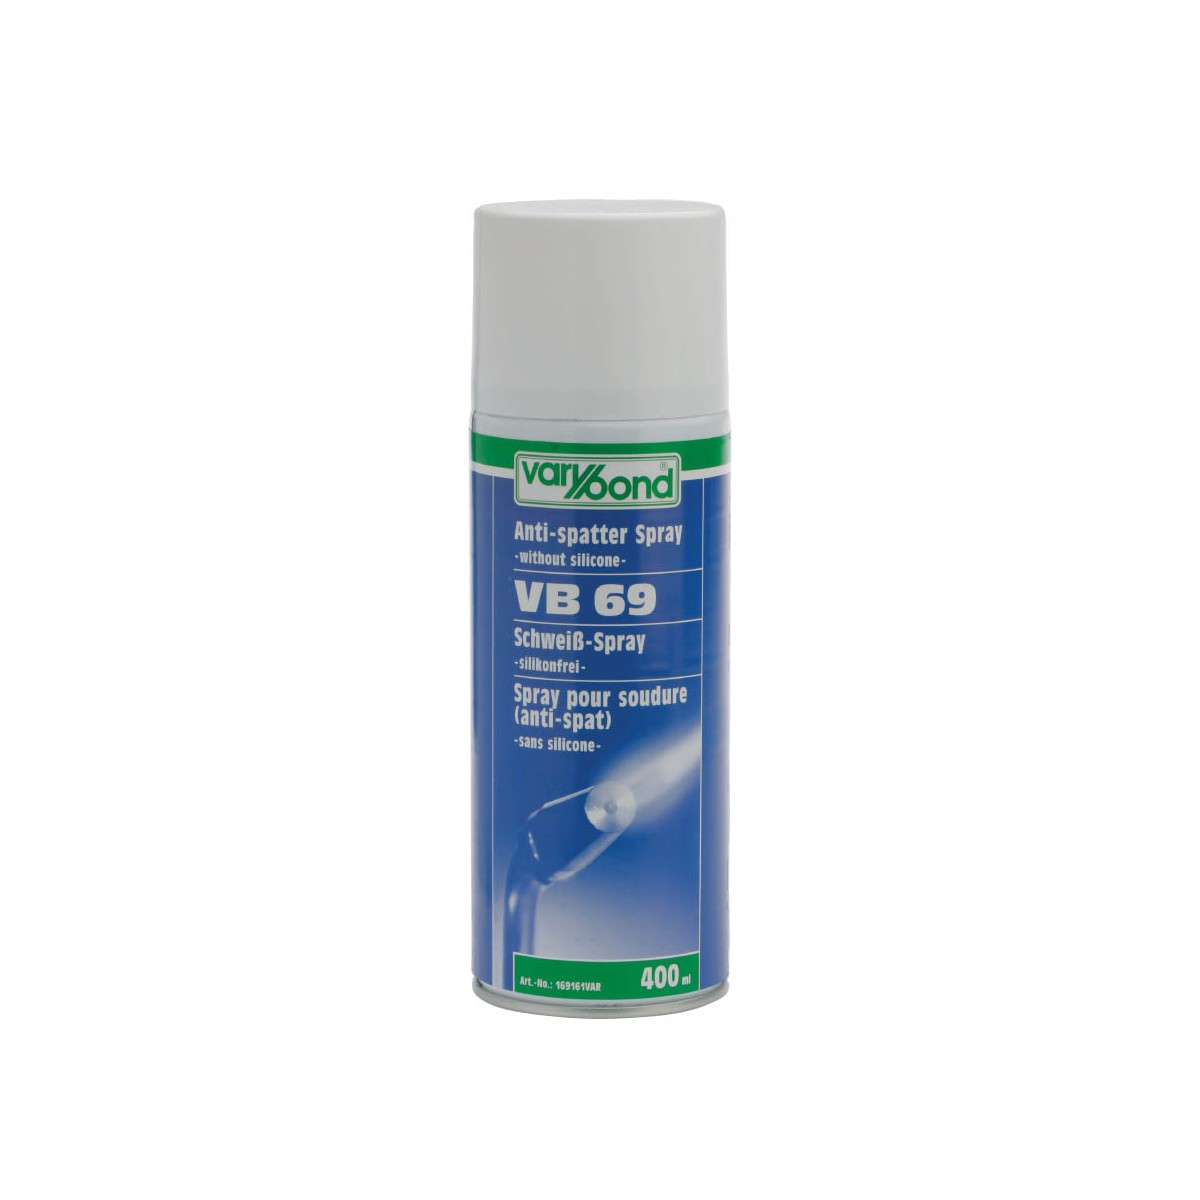 Anti-spatter spray Varybond VB 69 400ml